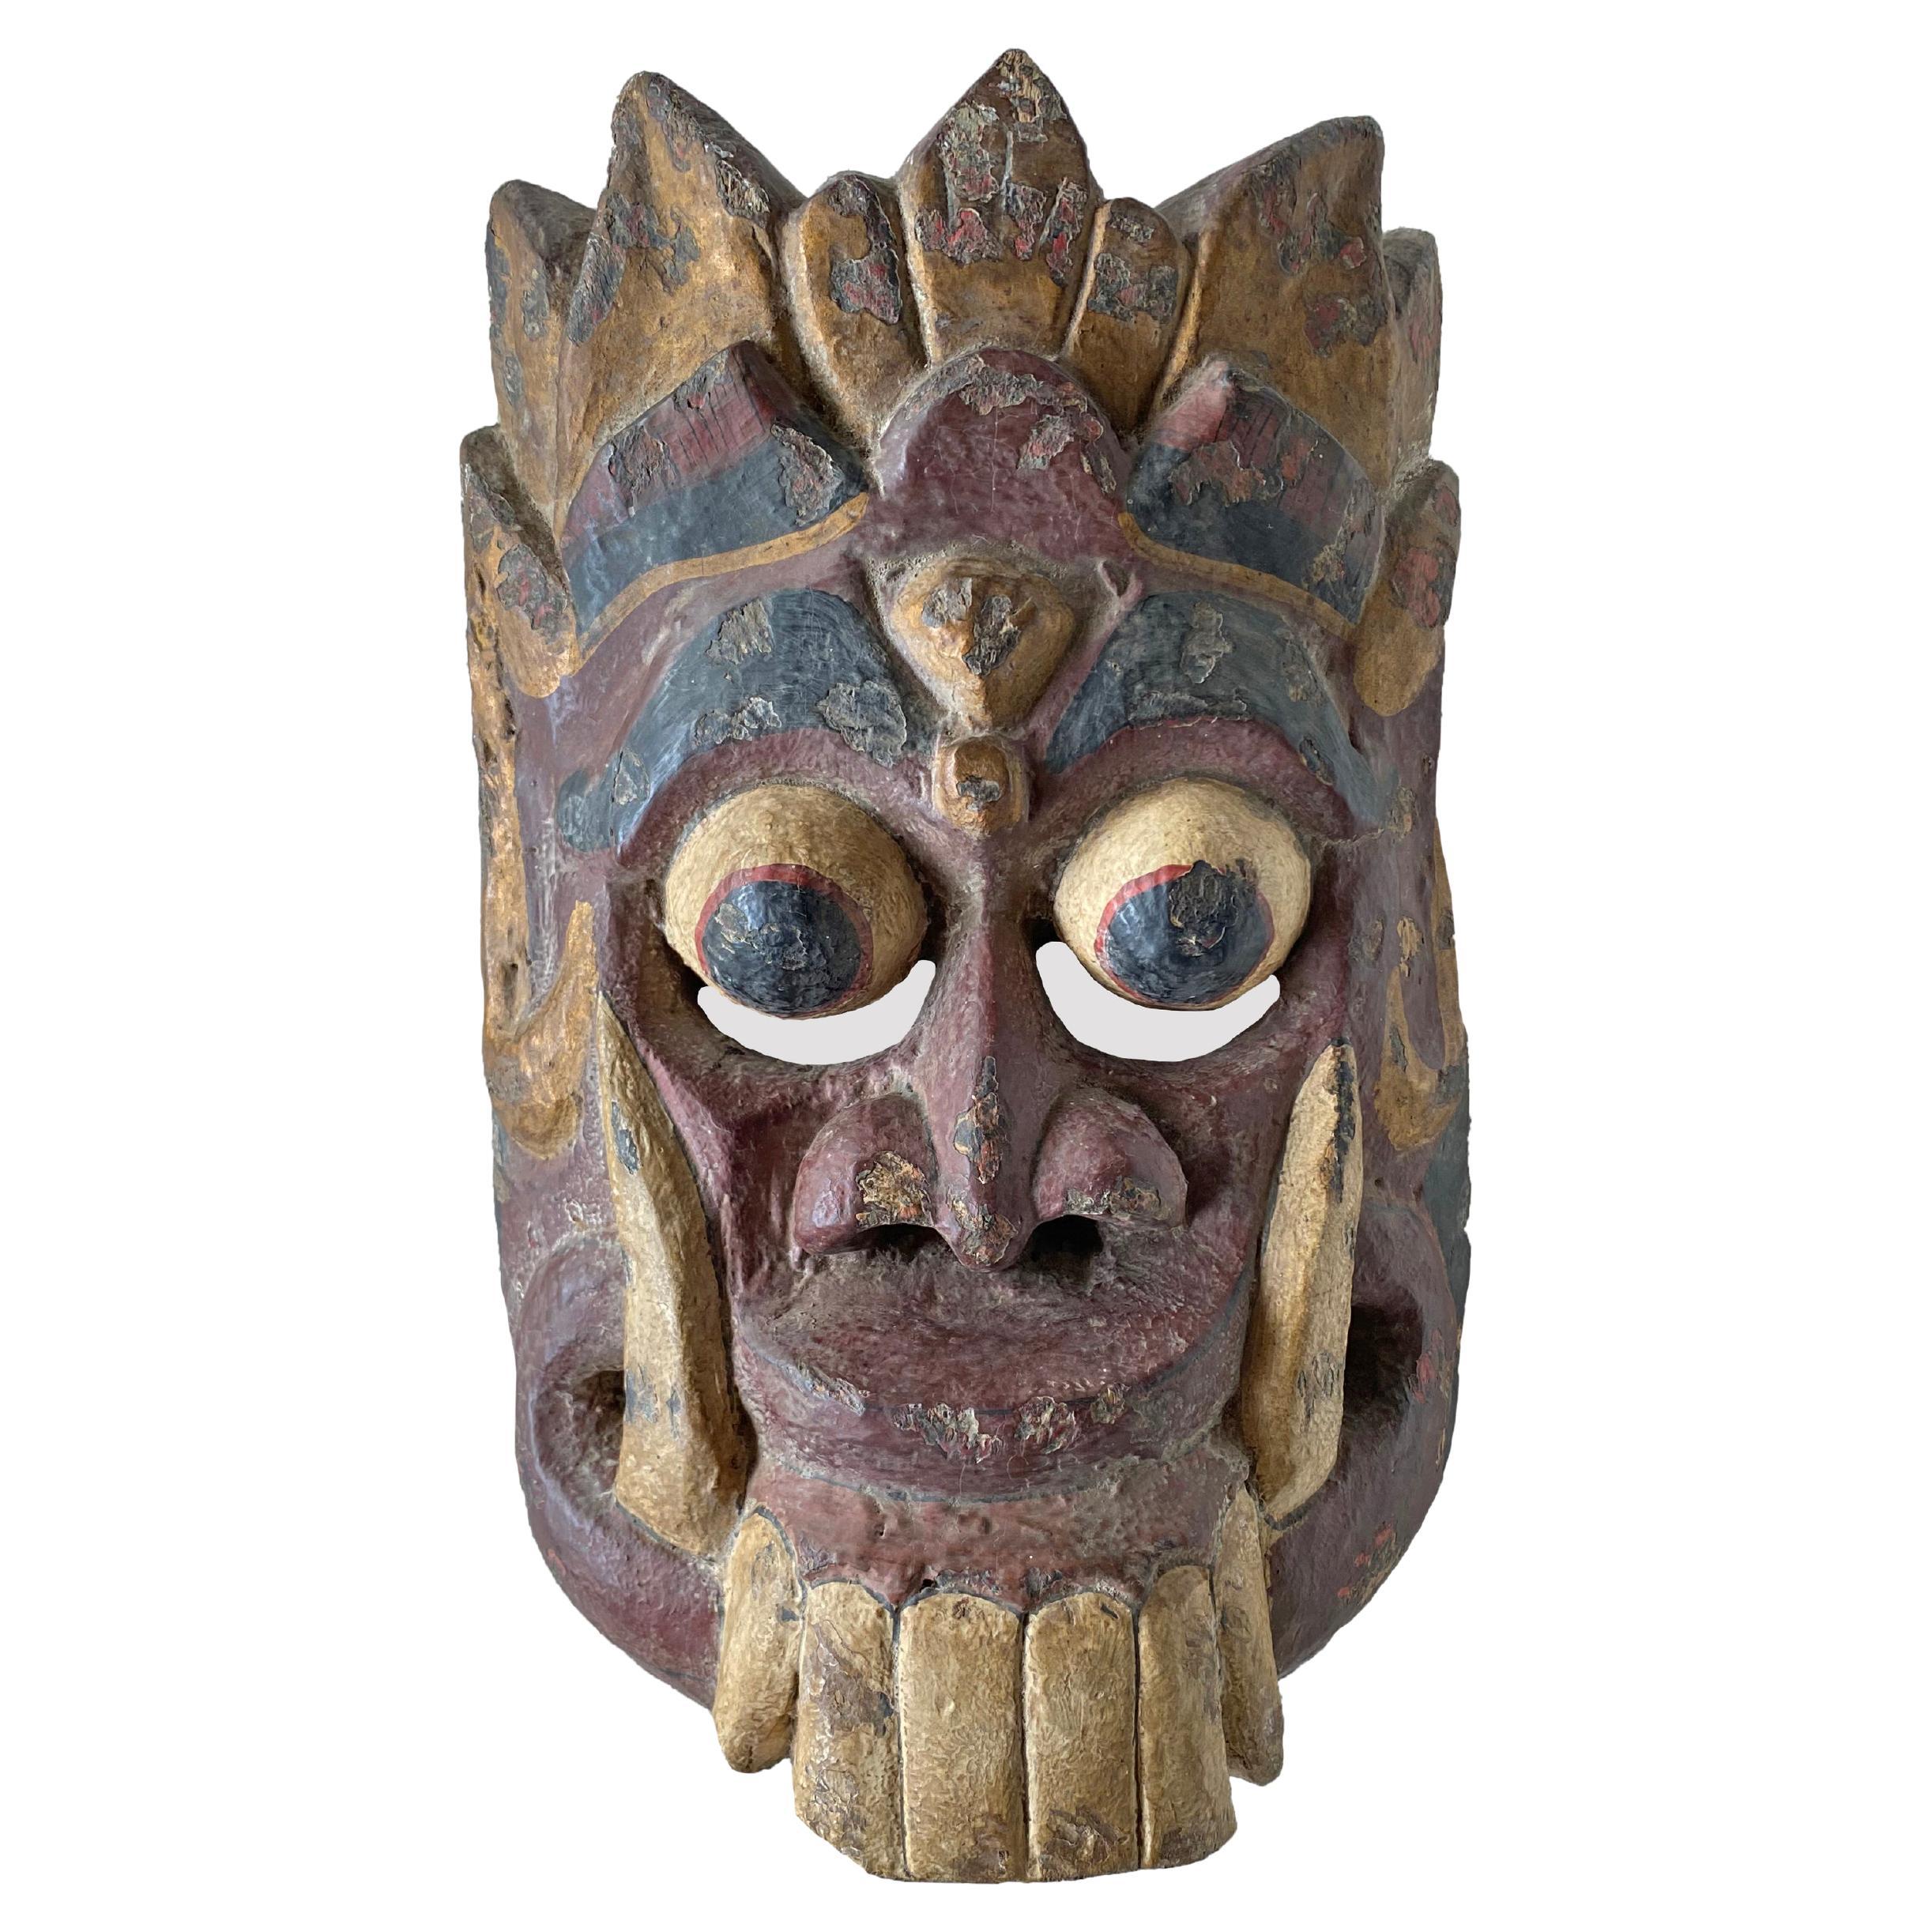 Balinese Hand-carved Mask Depicting Mythological 'Rangda' Demon Queen, c. 1900 For Sale